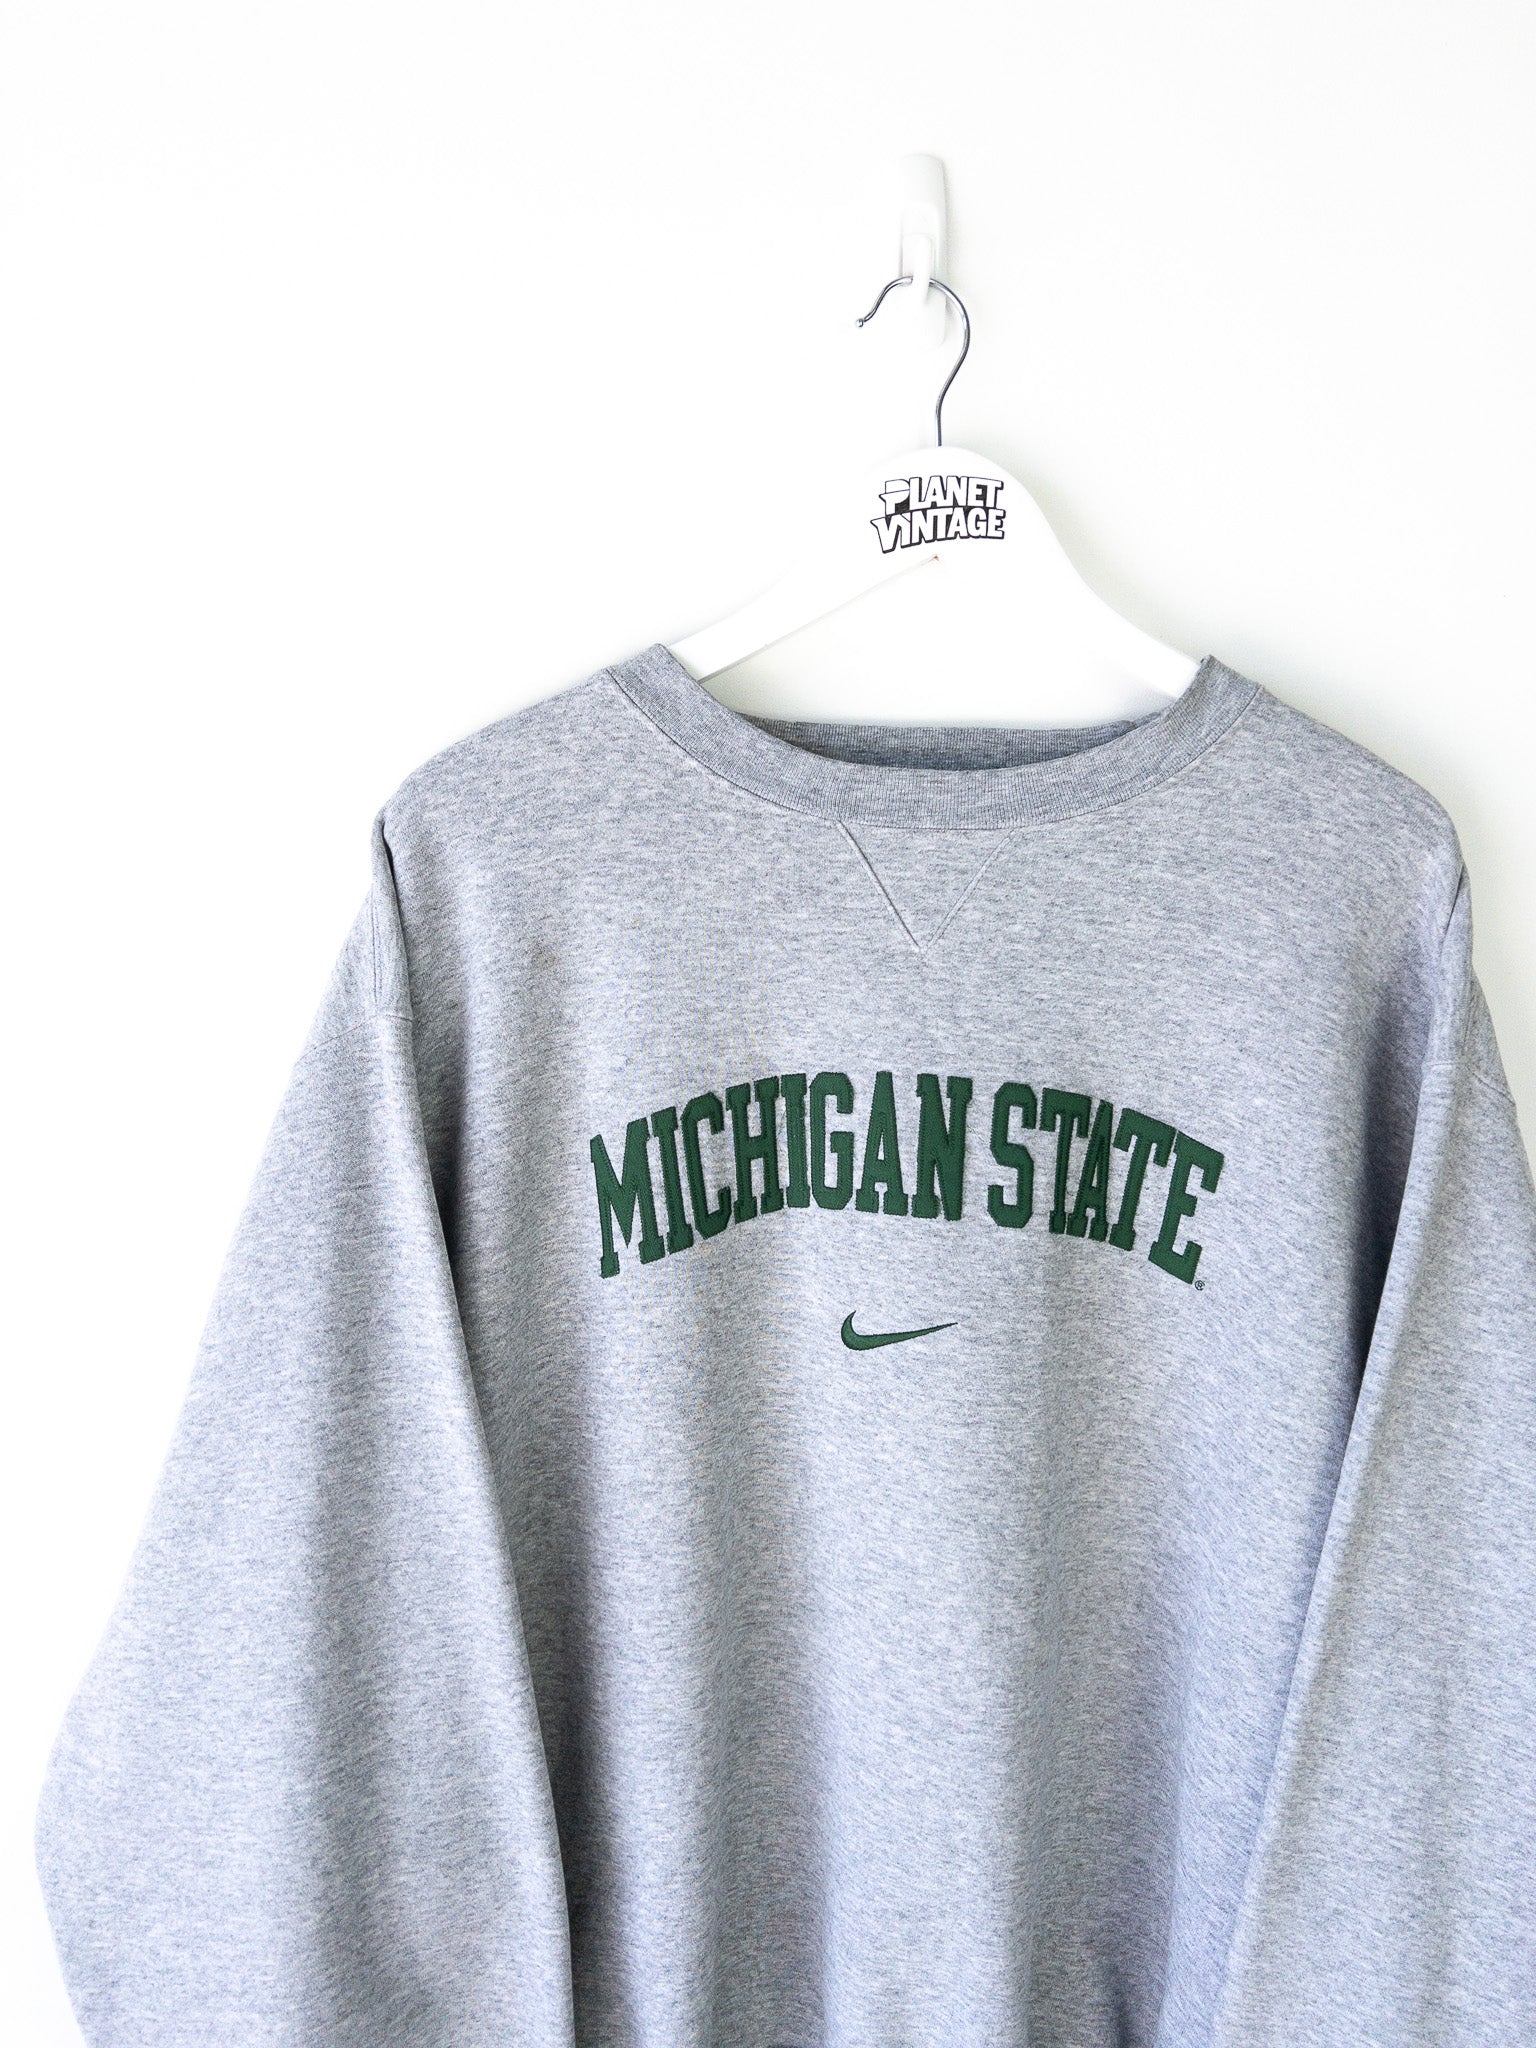 Vintage Michigan State Nike Sweatshirt (XXL)